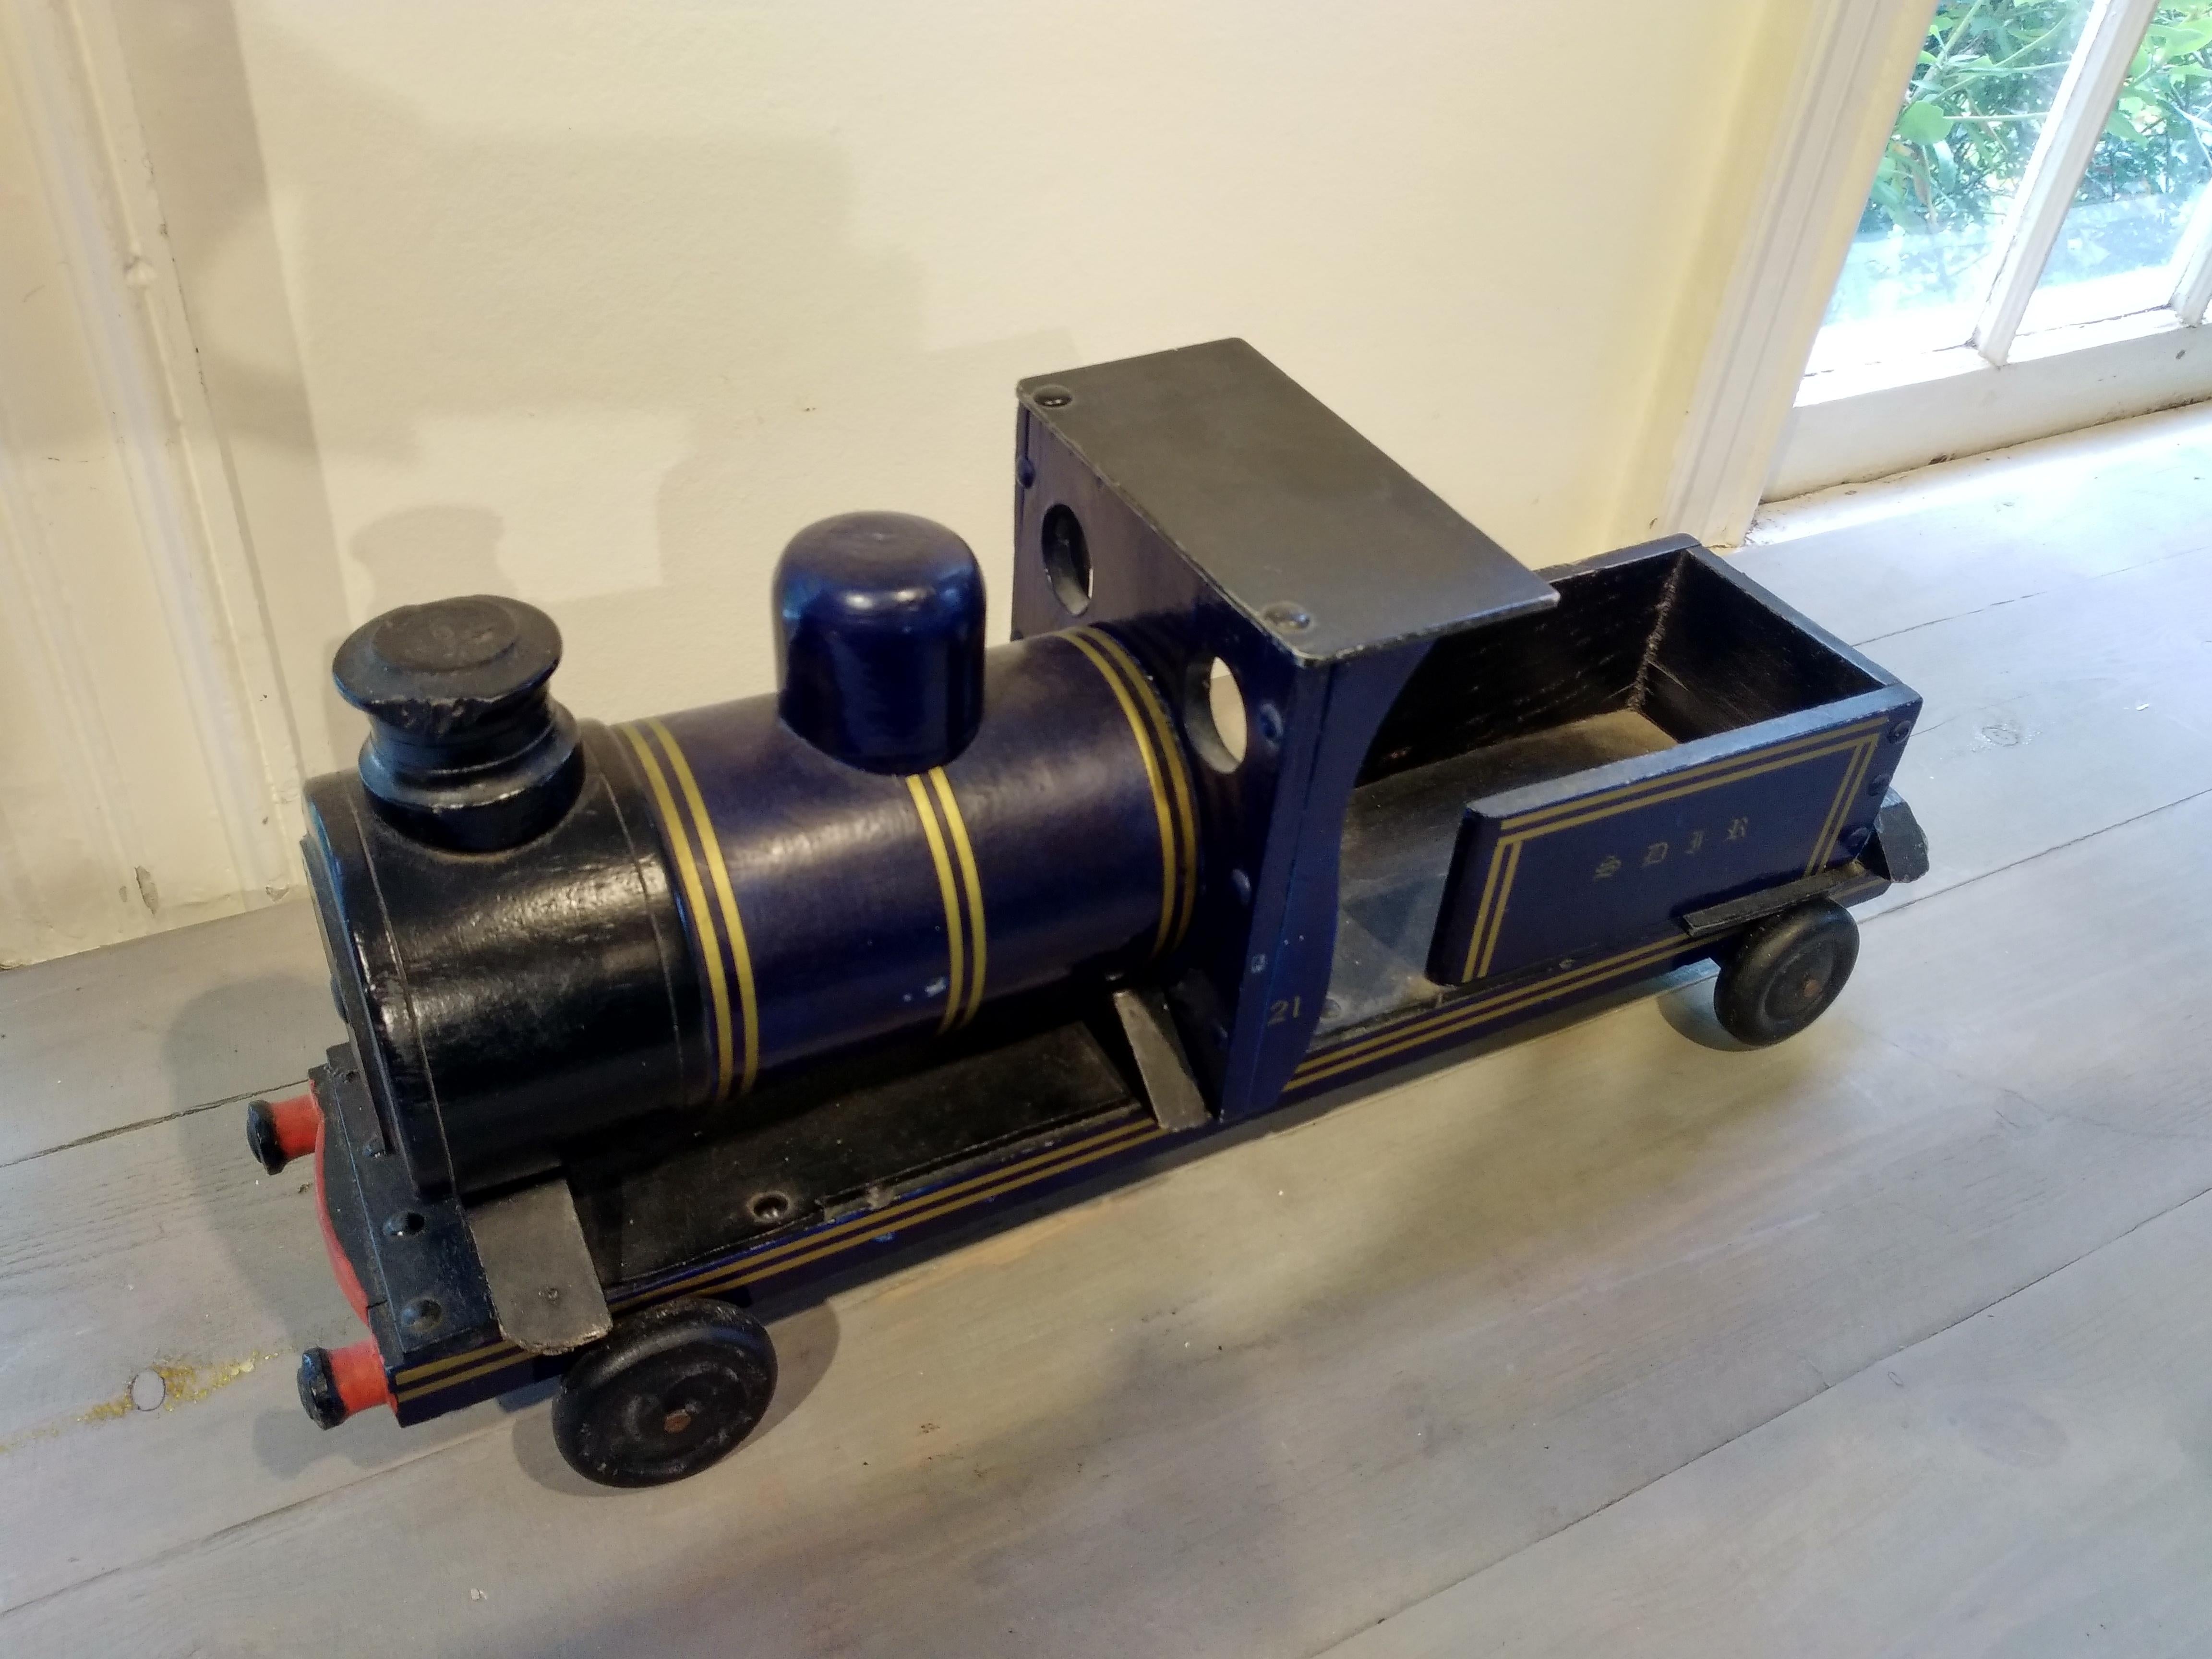 English Toy Train with Cargo Car, 1940 1